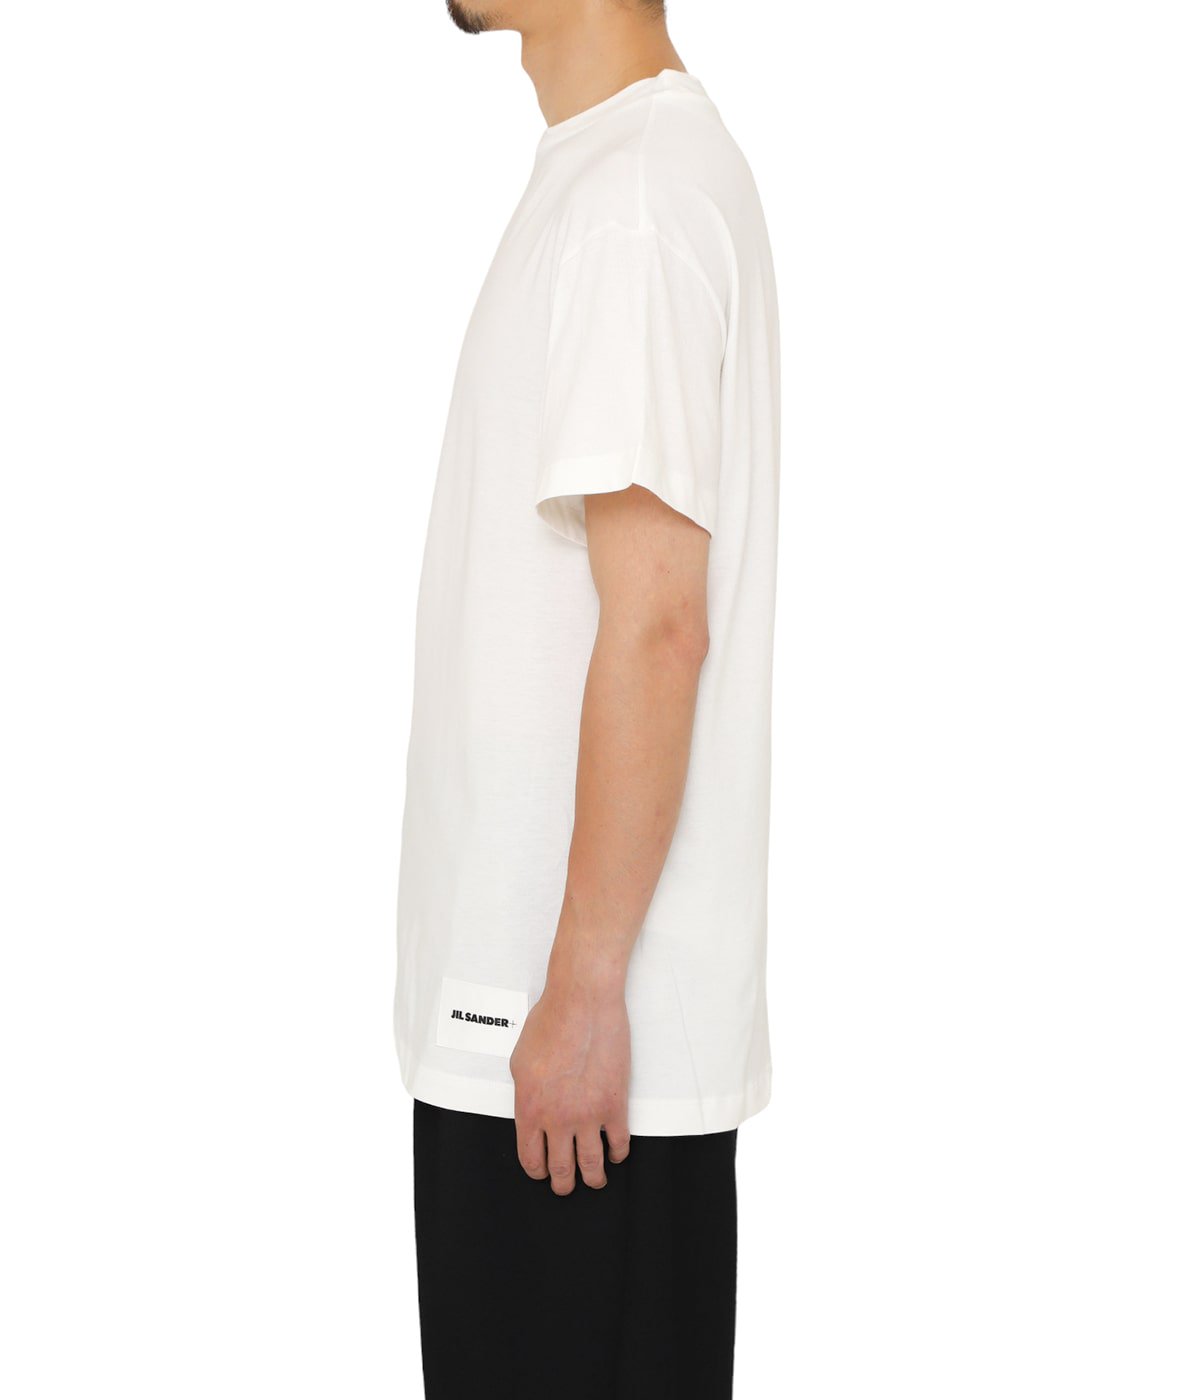 Jil Sander+ 3-Pack Tee ジルサンダー パック Tシャツ71cm身幅